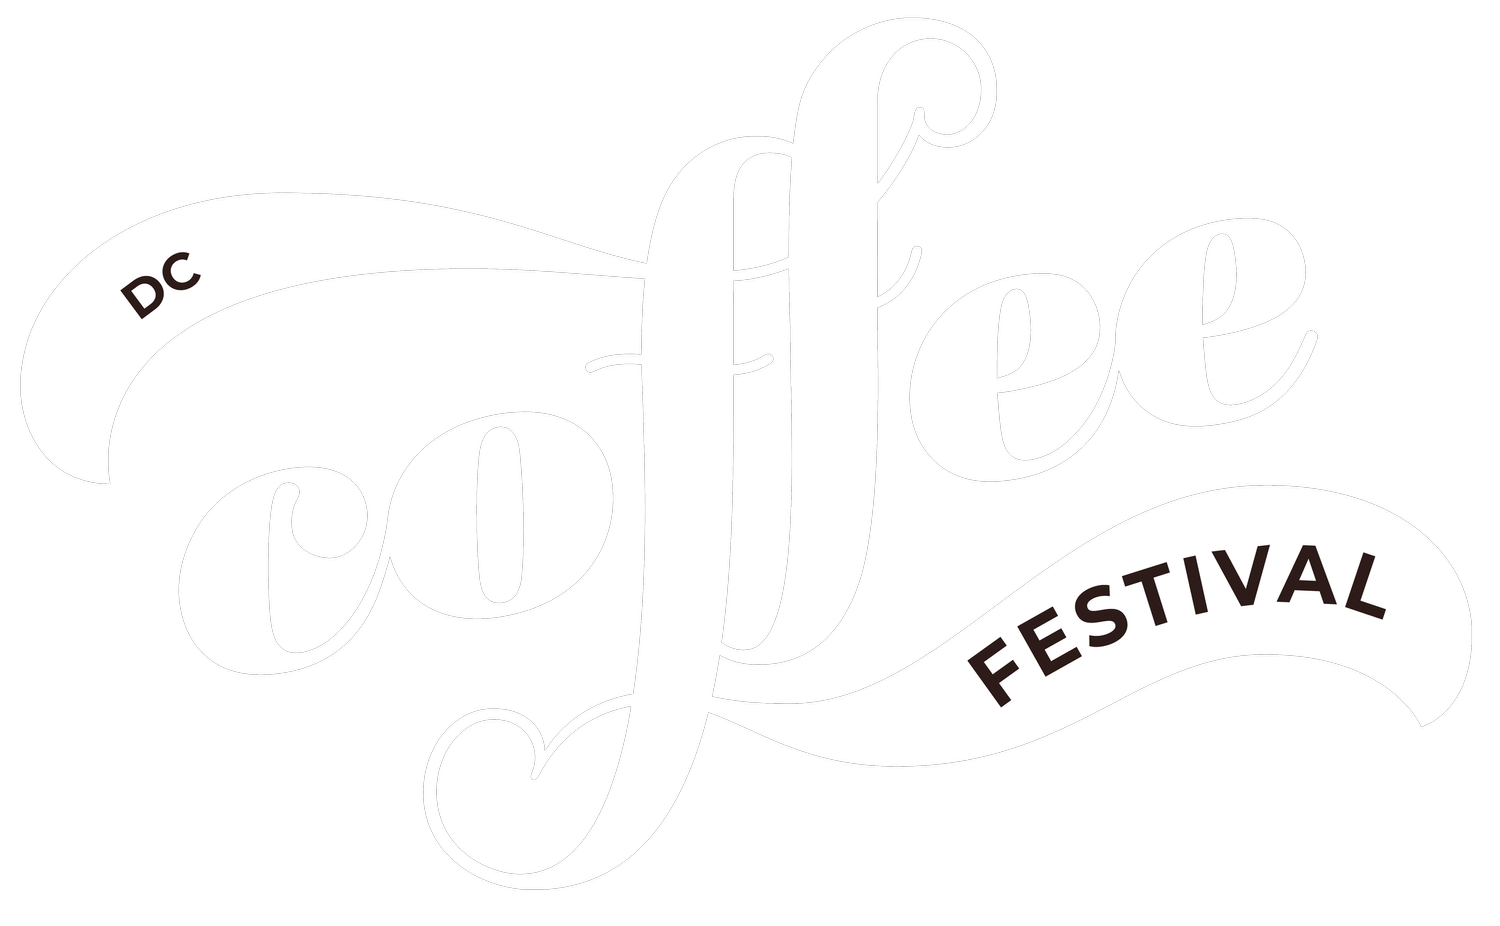 DC Coffee Festival